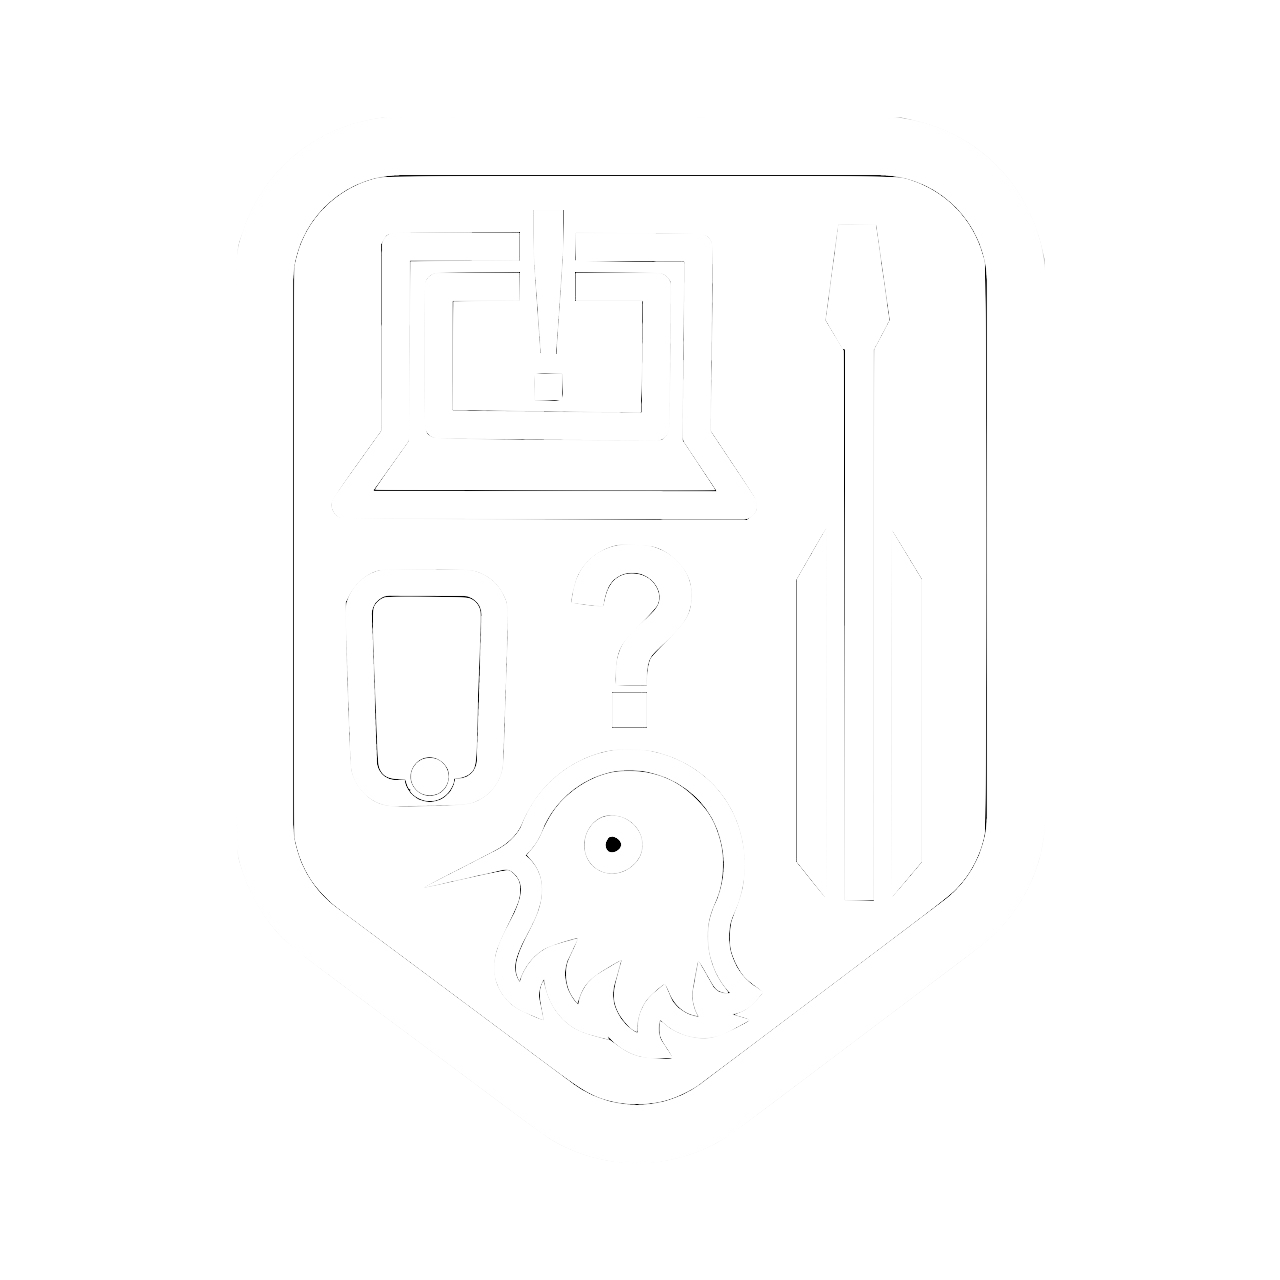 PC Repair service poppo store